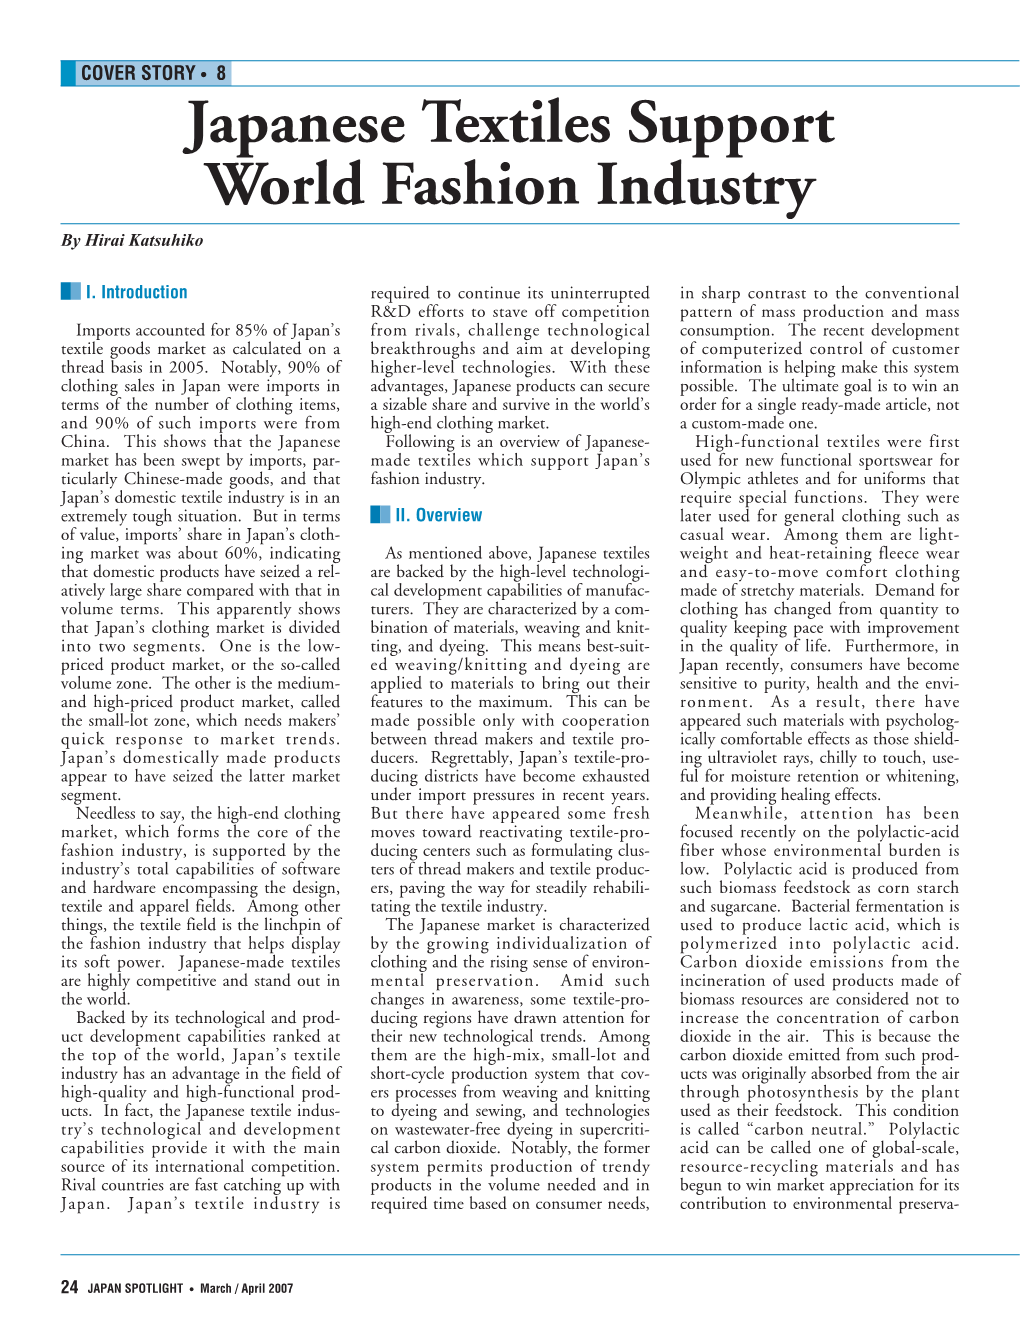 Japanese Textiles Support World Fashion Industry by Hirai Katsuhiko